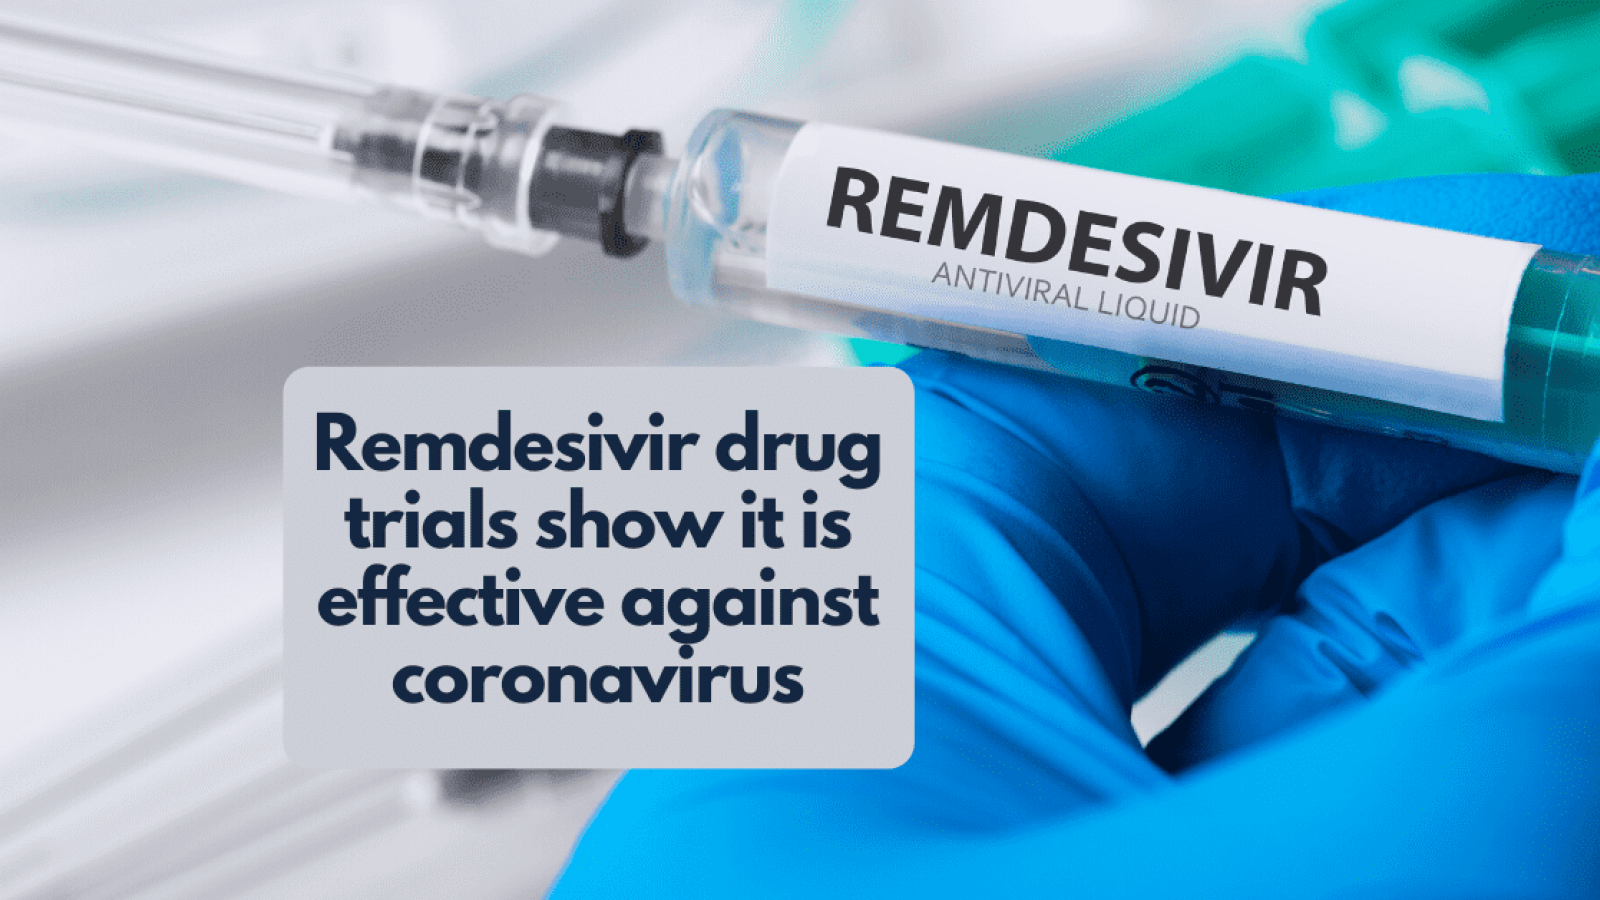 Remdesivir trials effective against coronaviruses in animals and humans